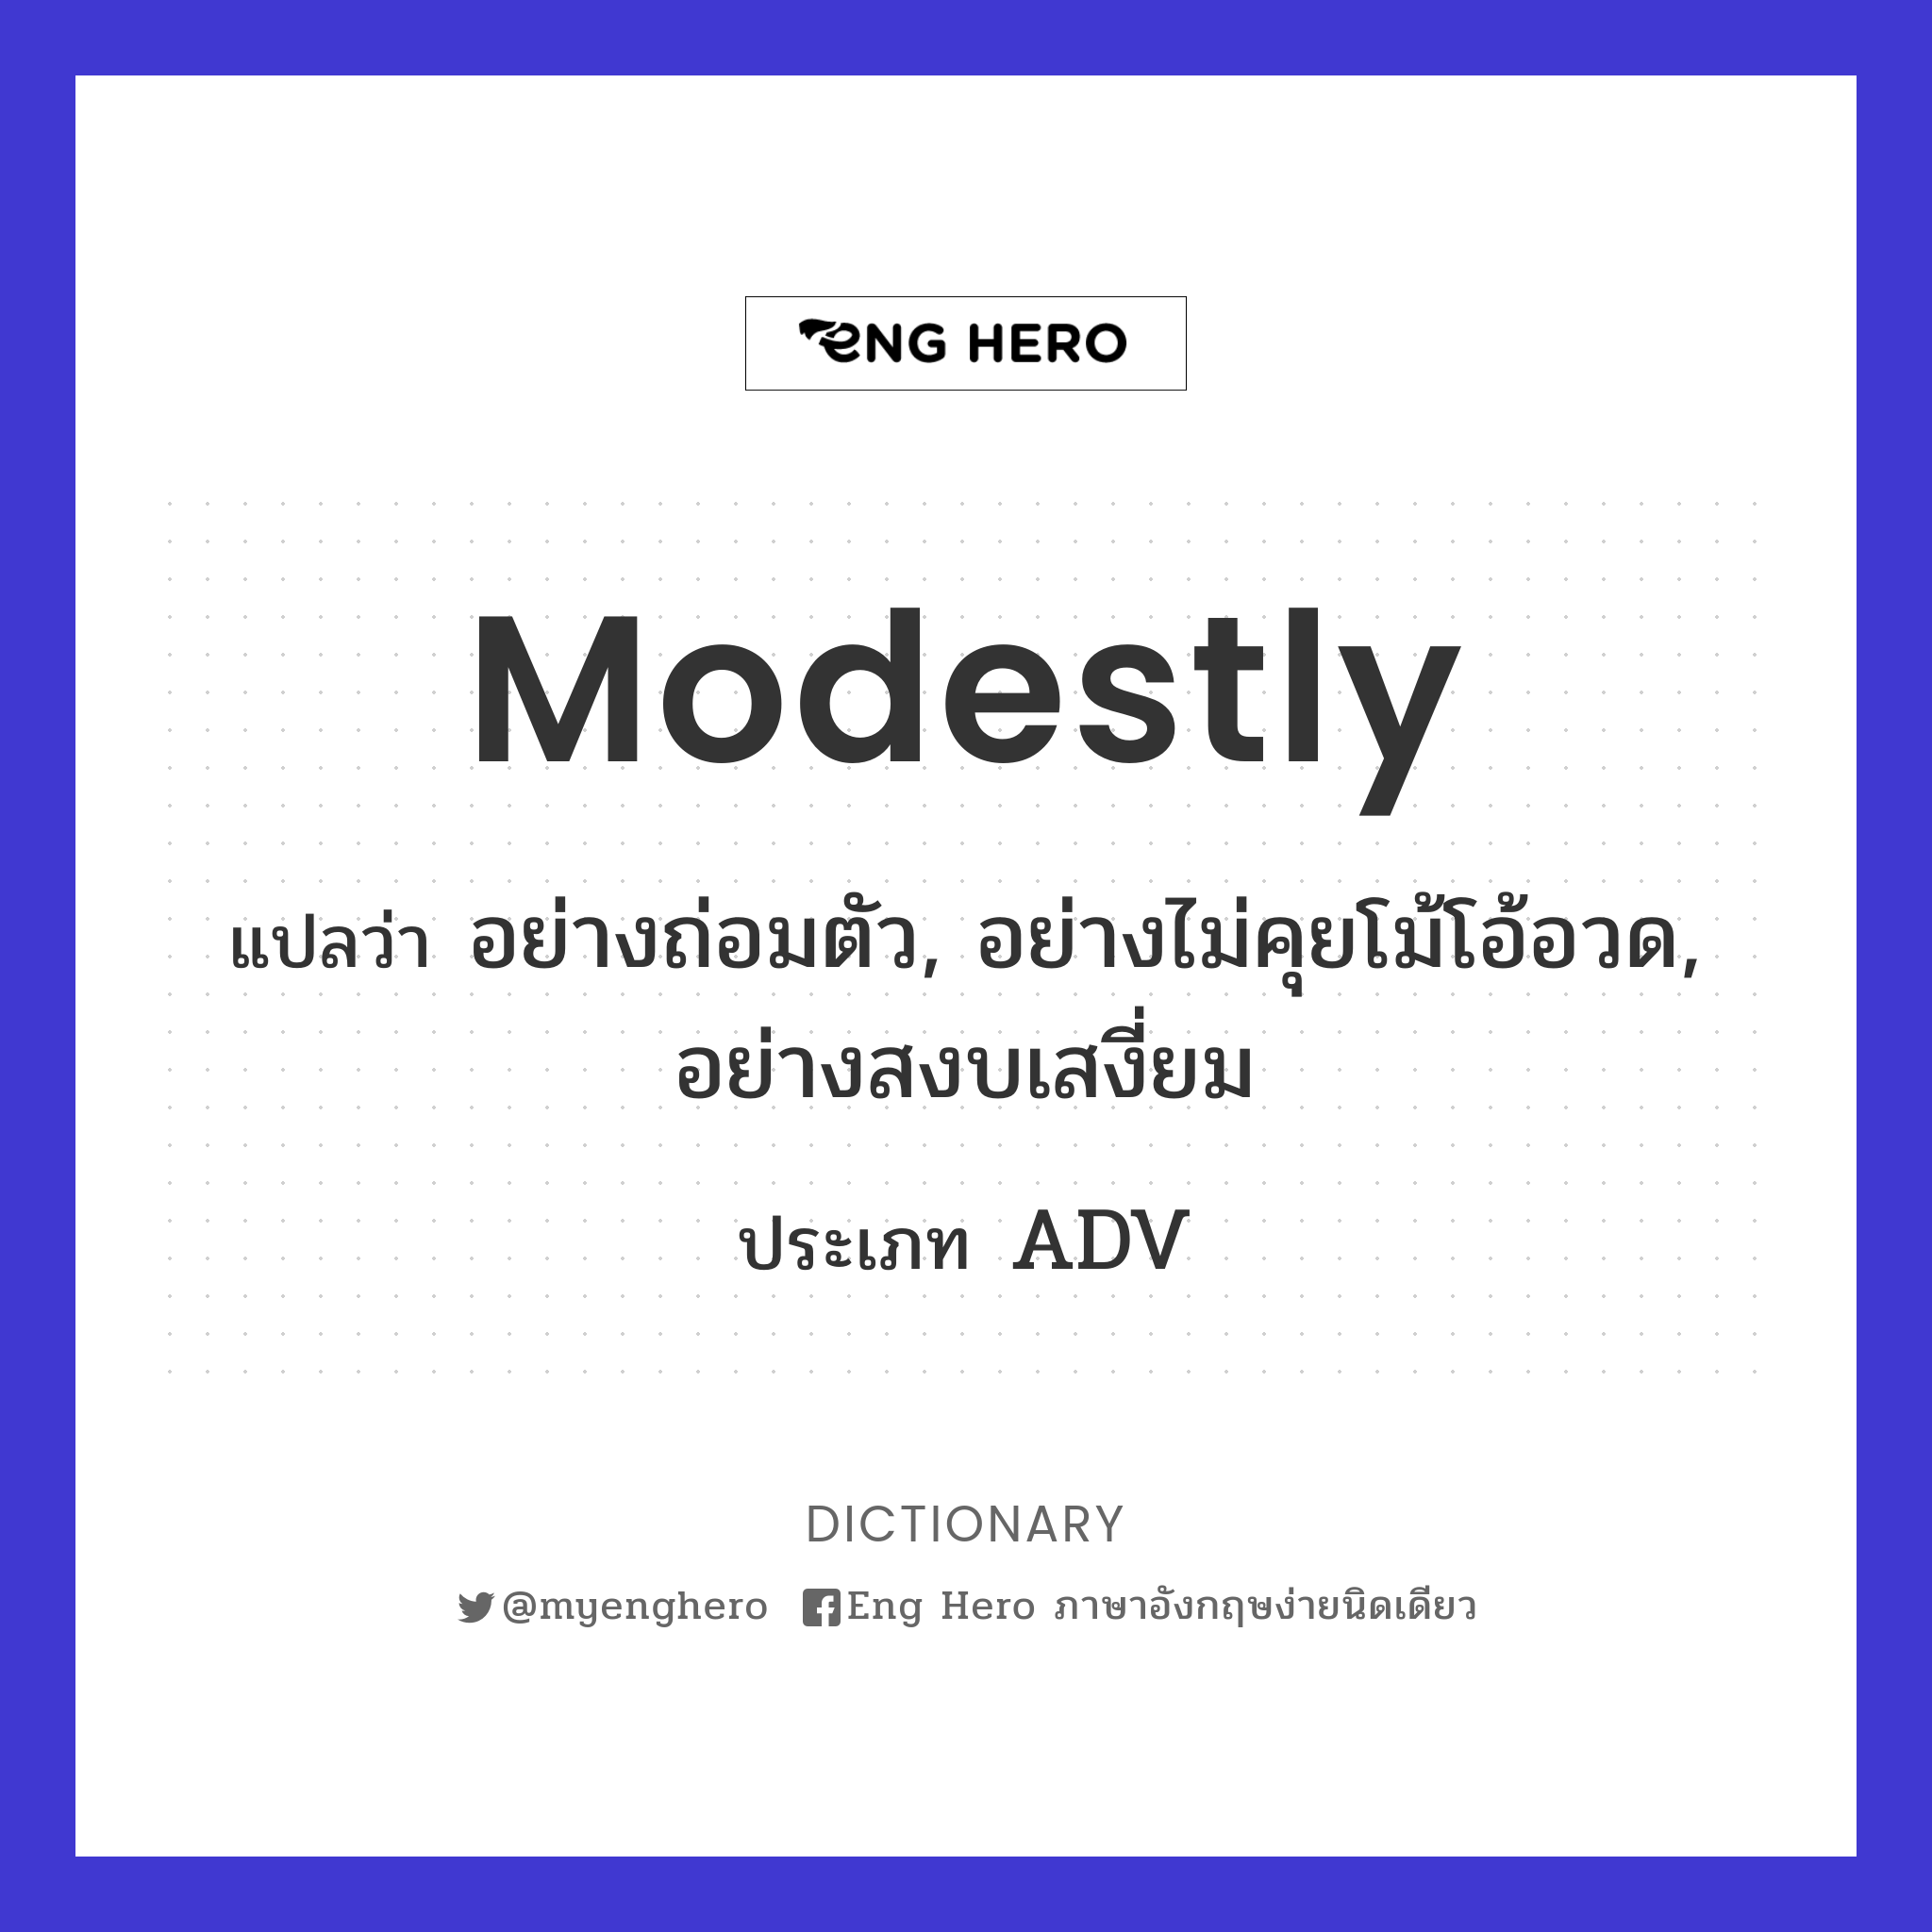 modestly